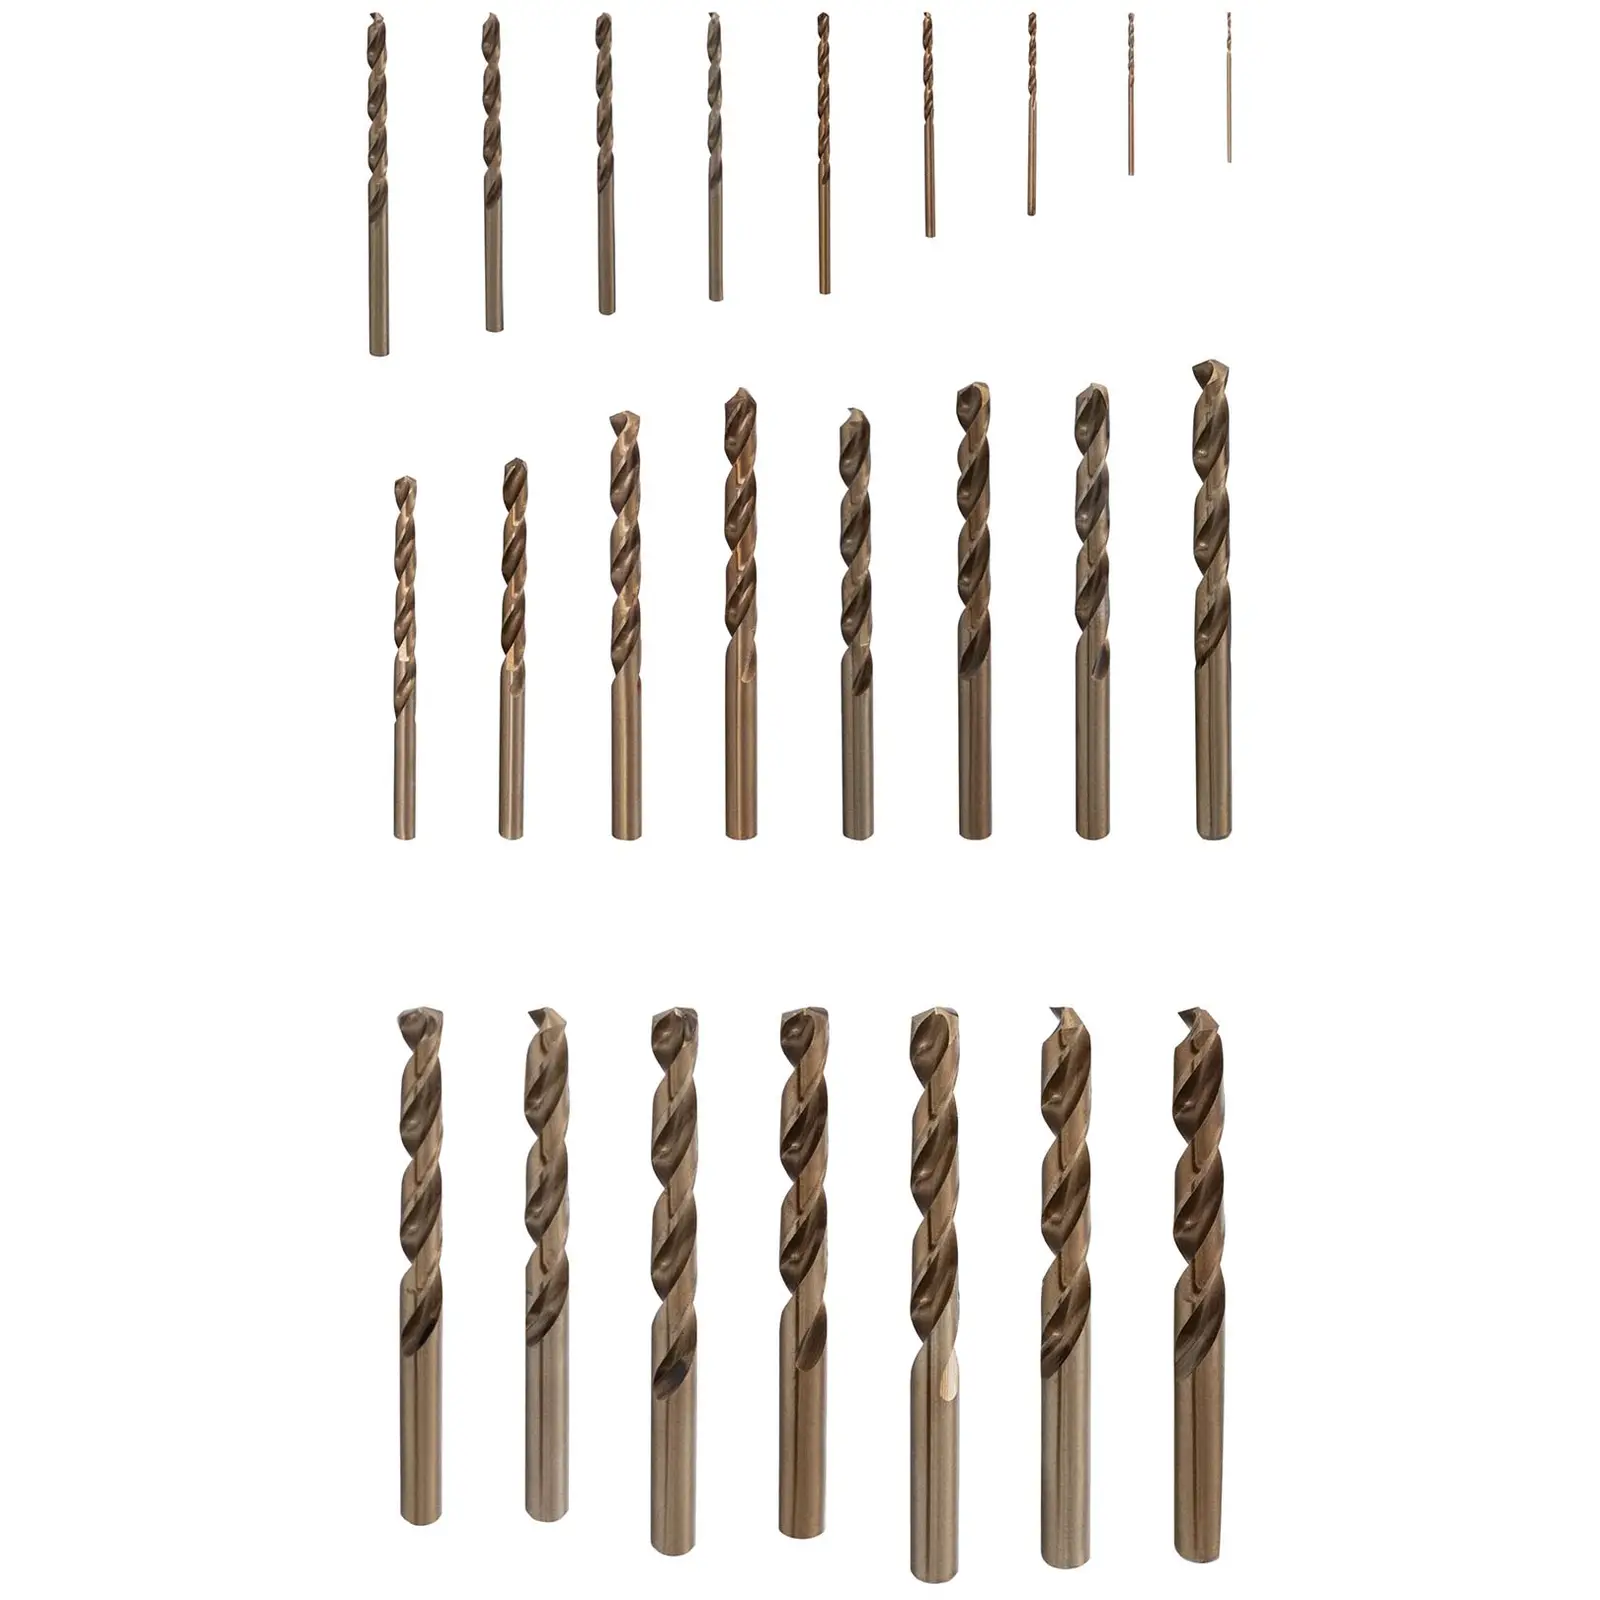 Metal Drill Set - HSS-Co steel - 25 pieces